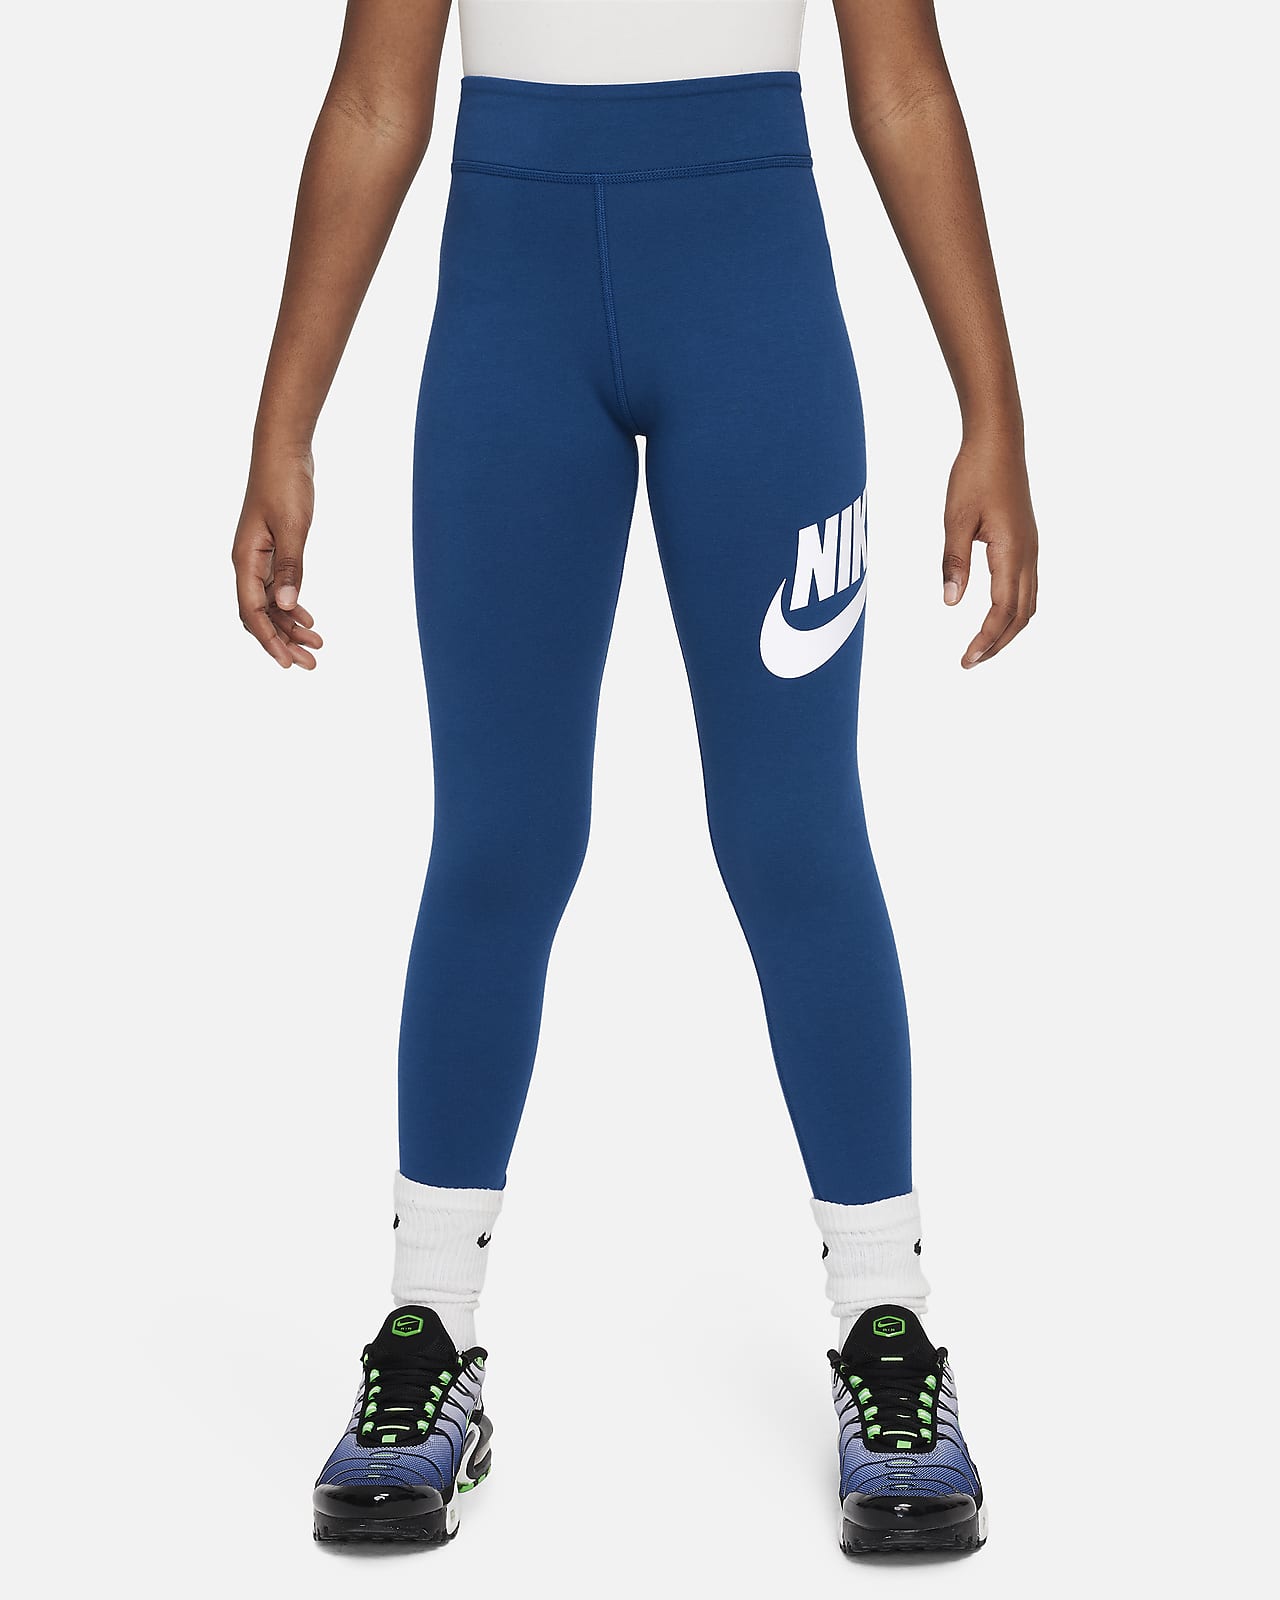 Nike Plus essential leggings in black with futura logo print